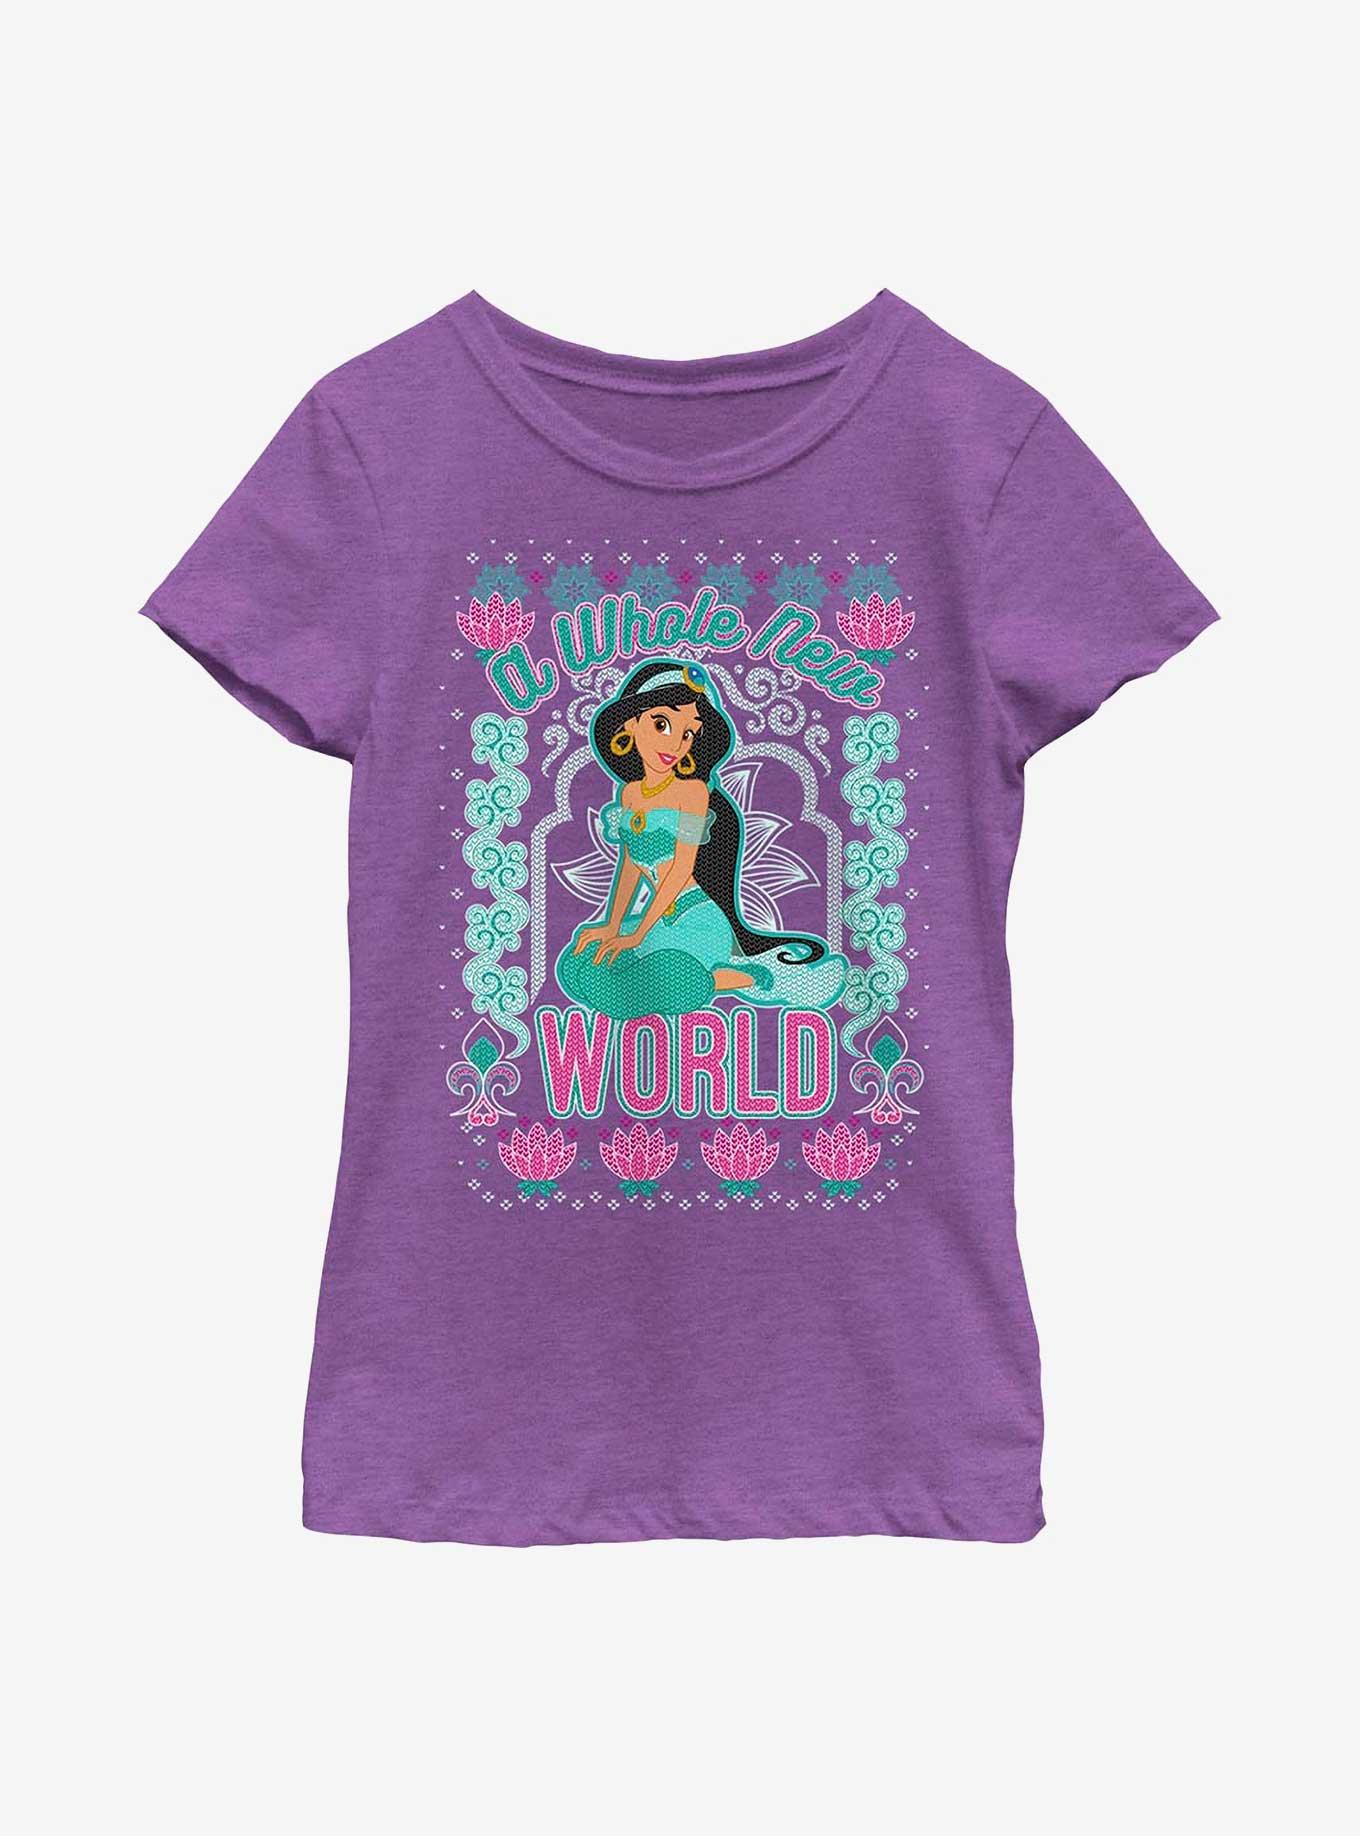 Disney Aladdin Jasmine A Whole New World Pattern Youth Girls T-Shirt, PURPLE BERRY, hi-res